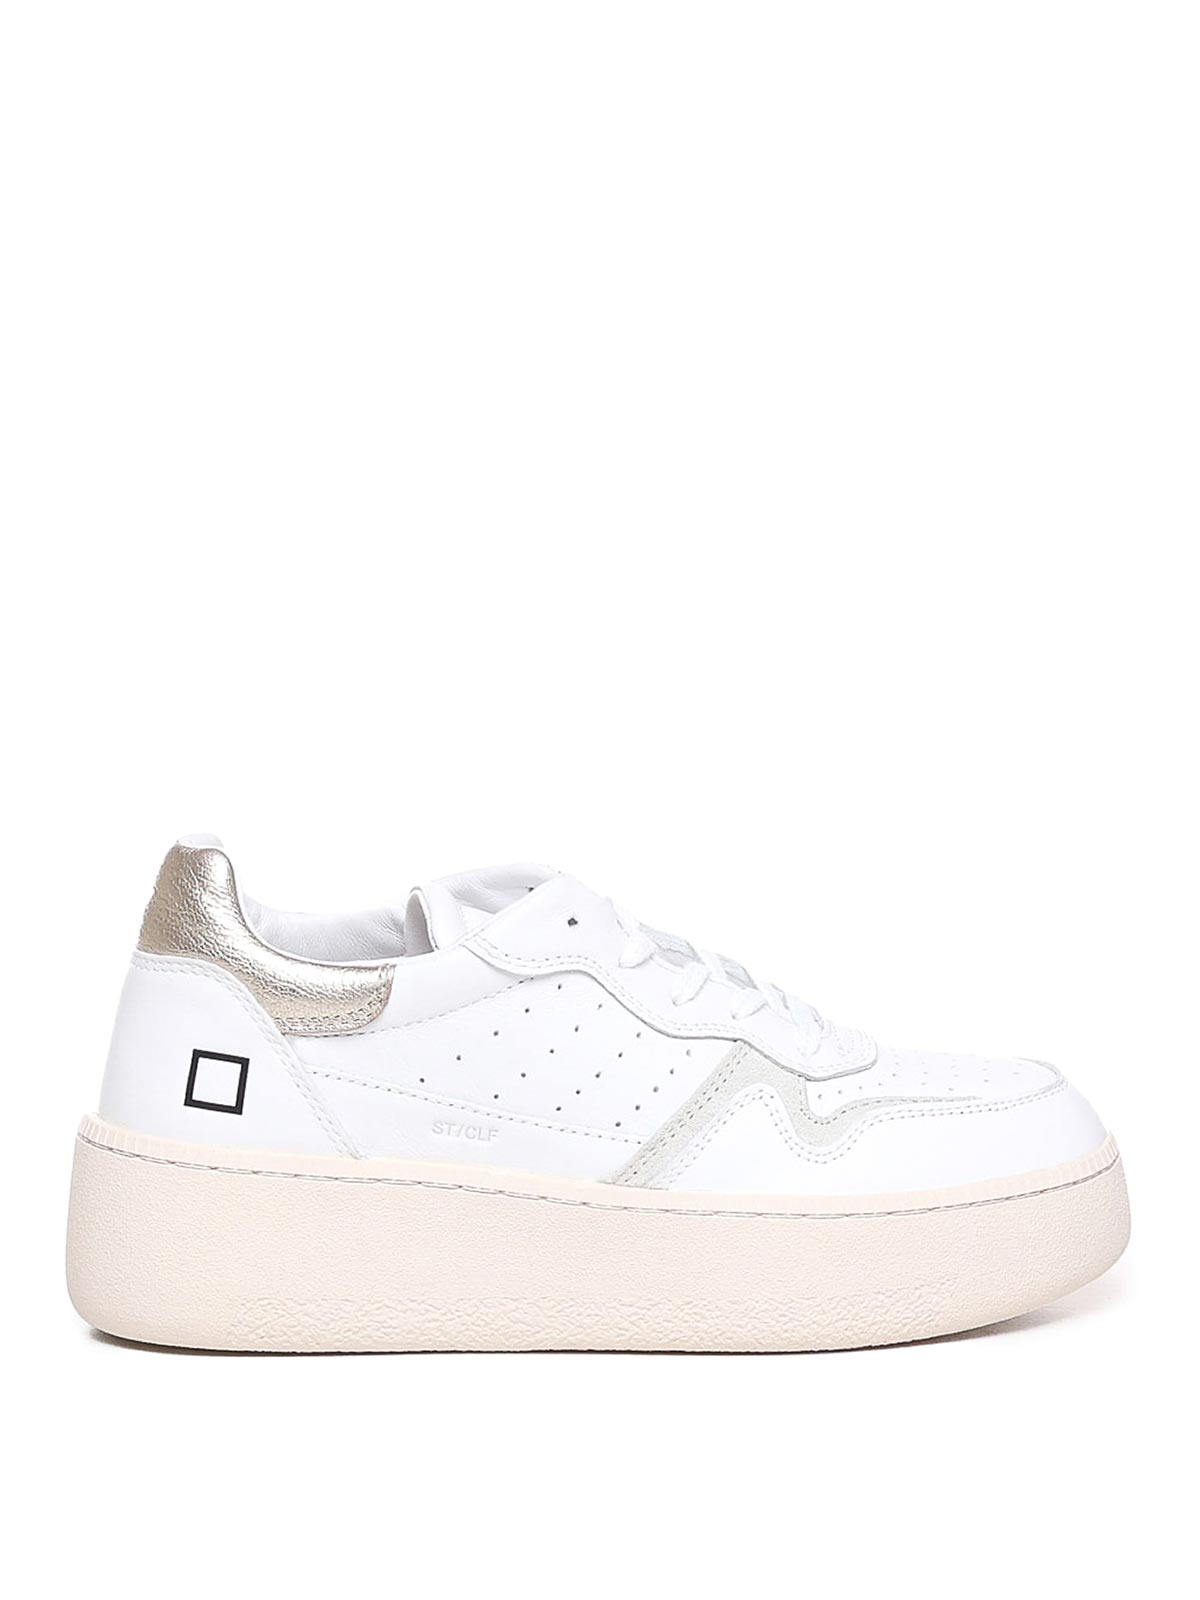 Shop Date Sfera Basic Sneakers In White